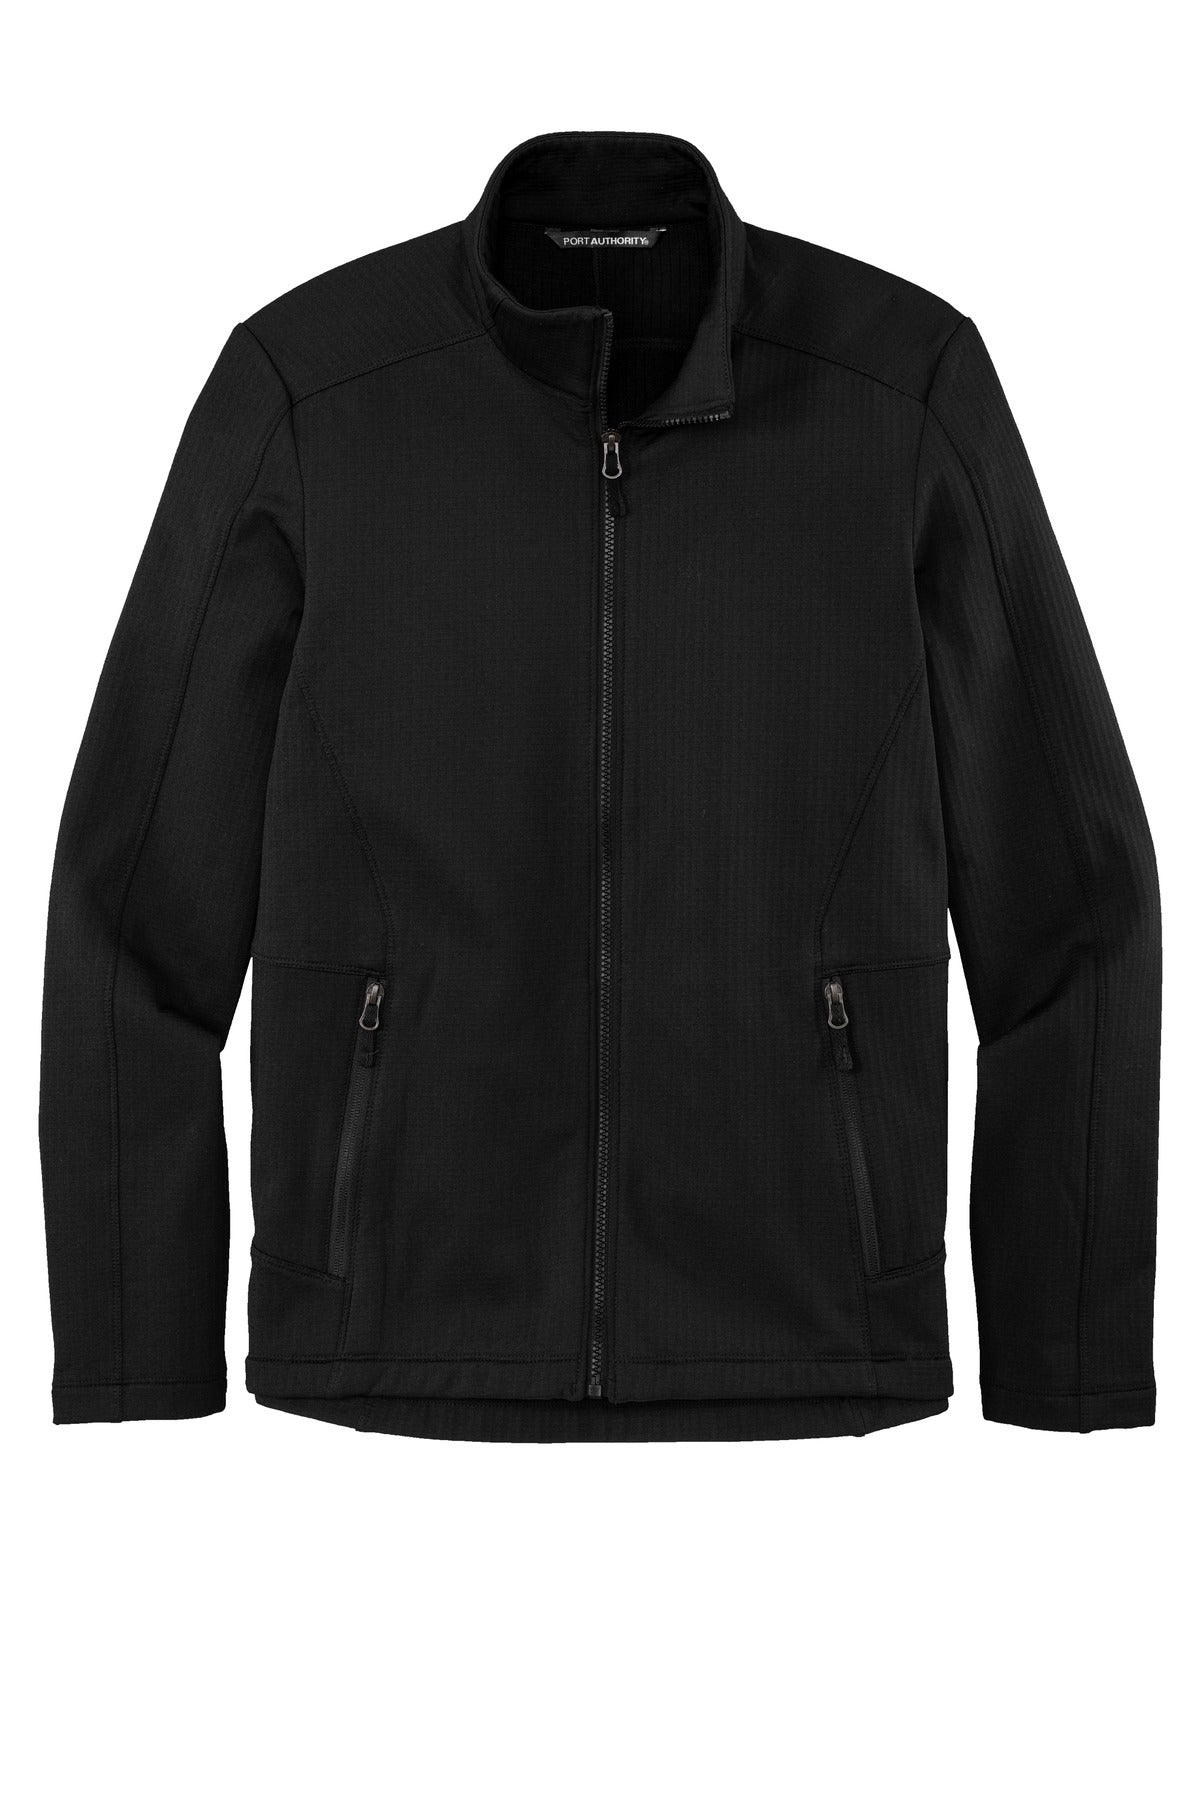 Port Authority Grid Fleece Jacket. F239